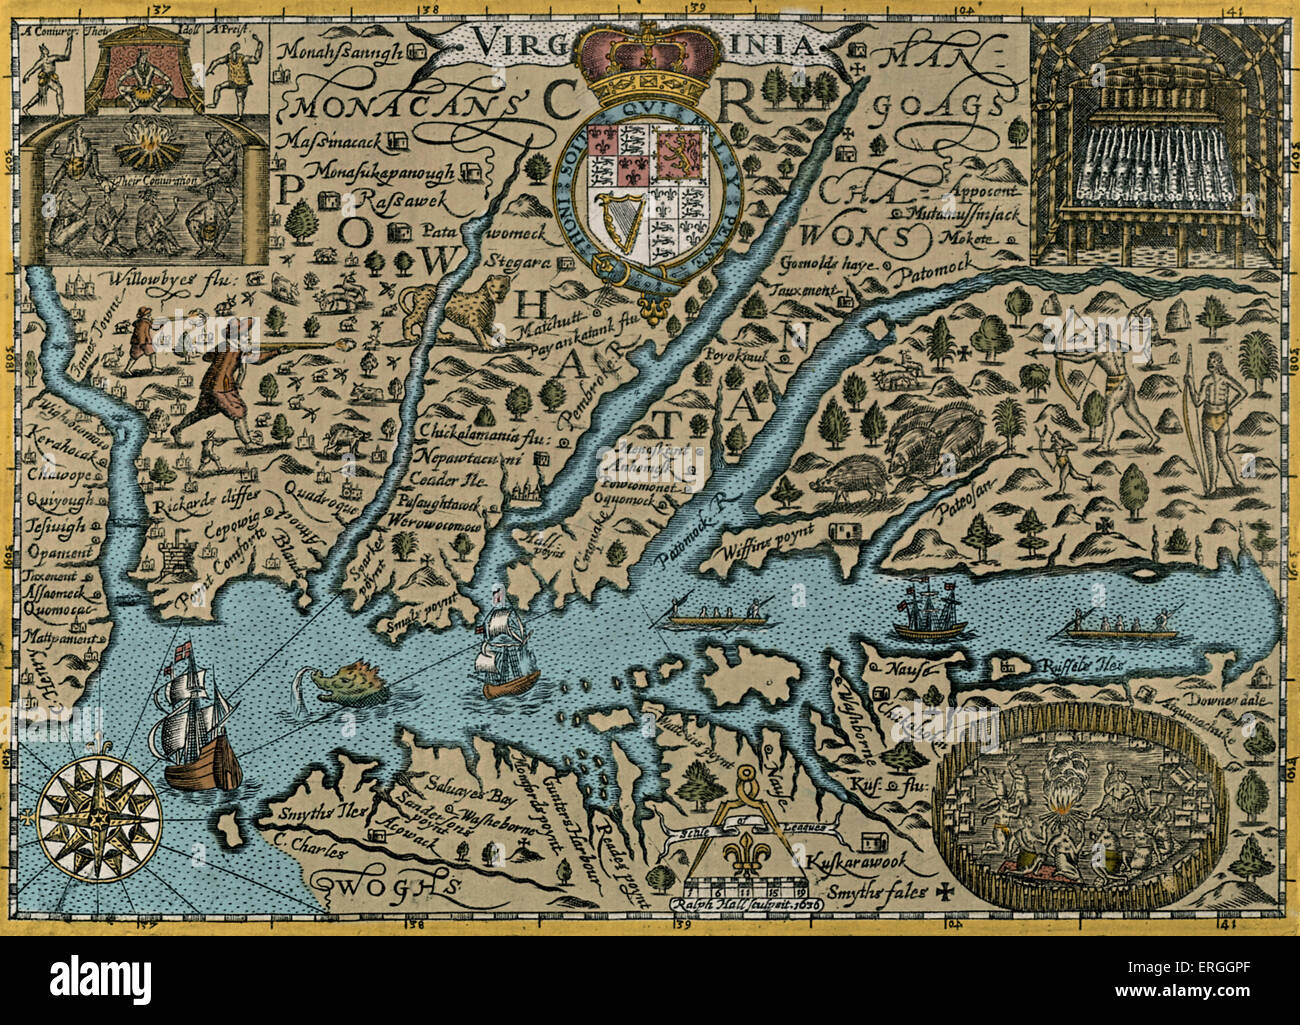 Map of Virgina - published in Mercator 's 'Historia Mundi', 1635. Stock Photo